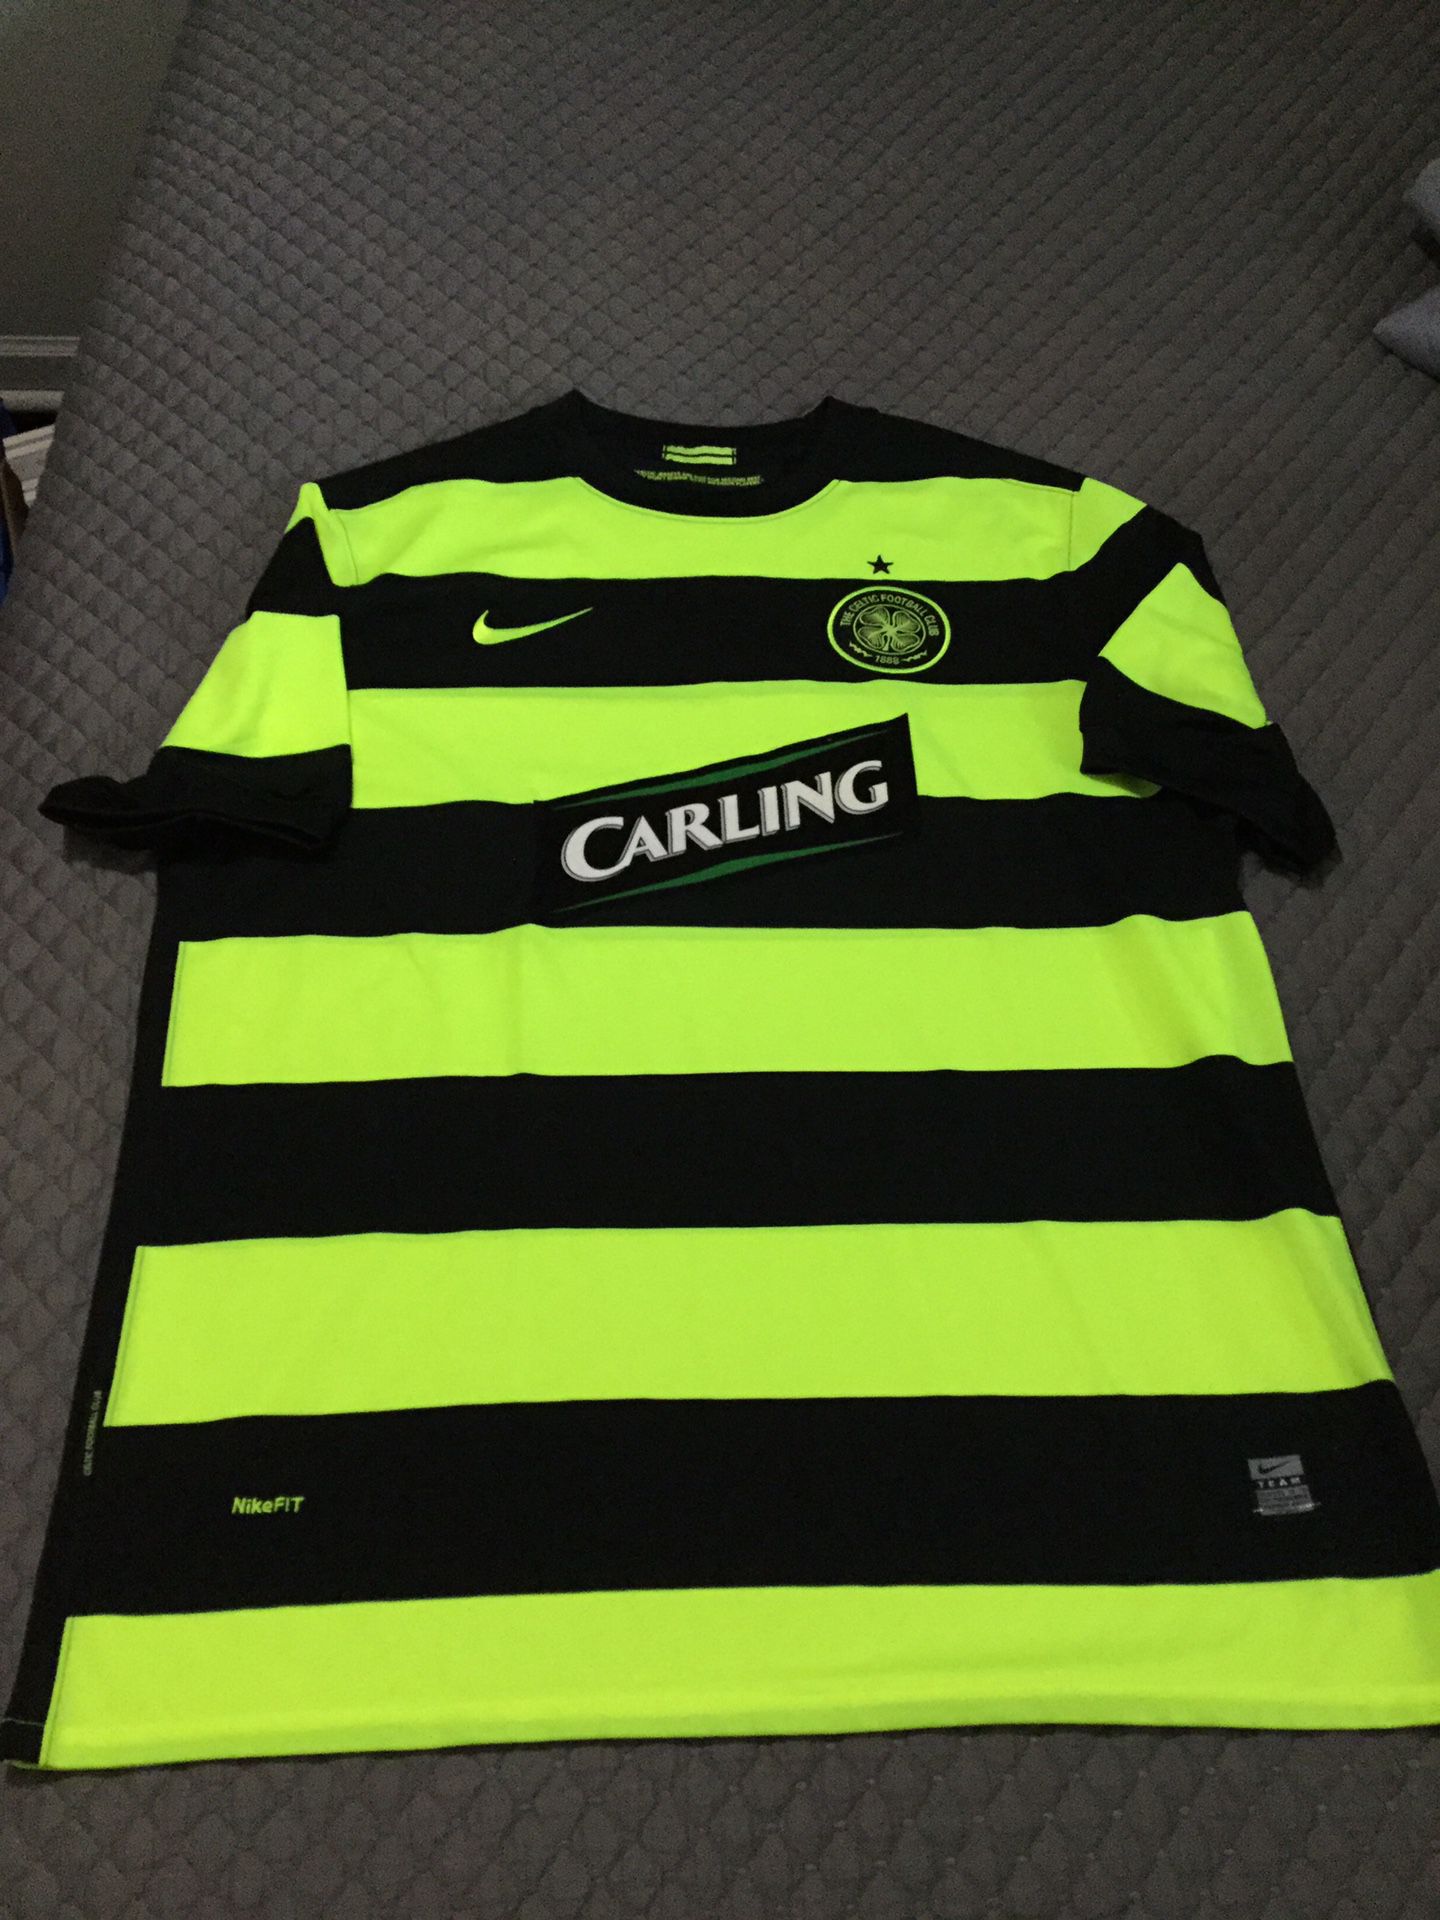 Nike Celtic Football Club soccer jersey XL